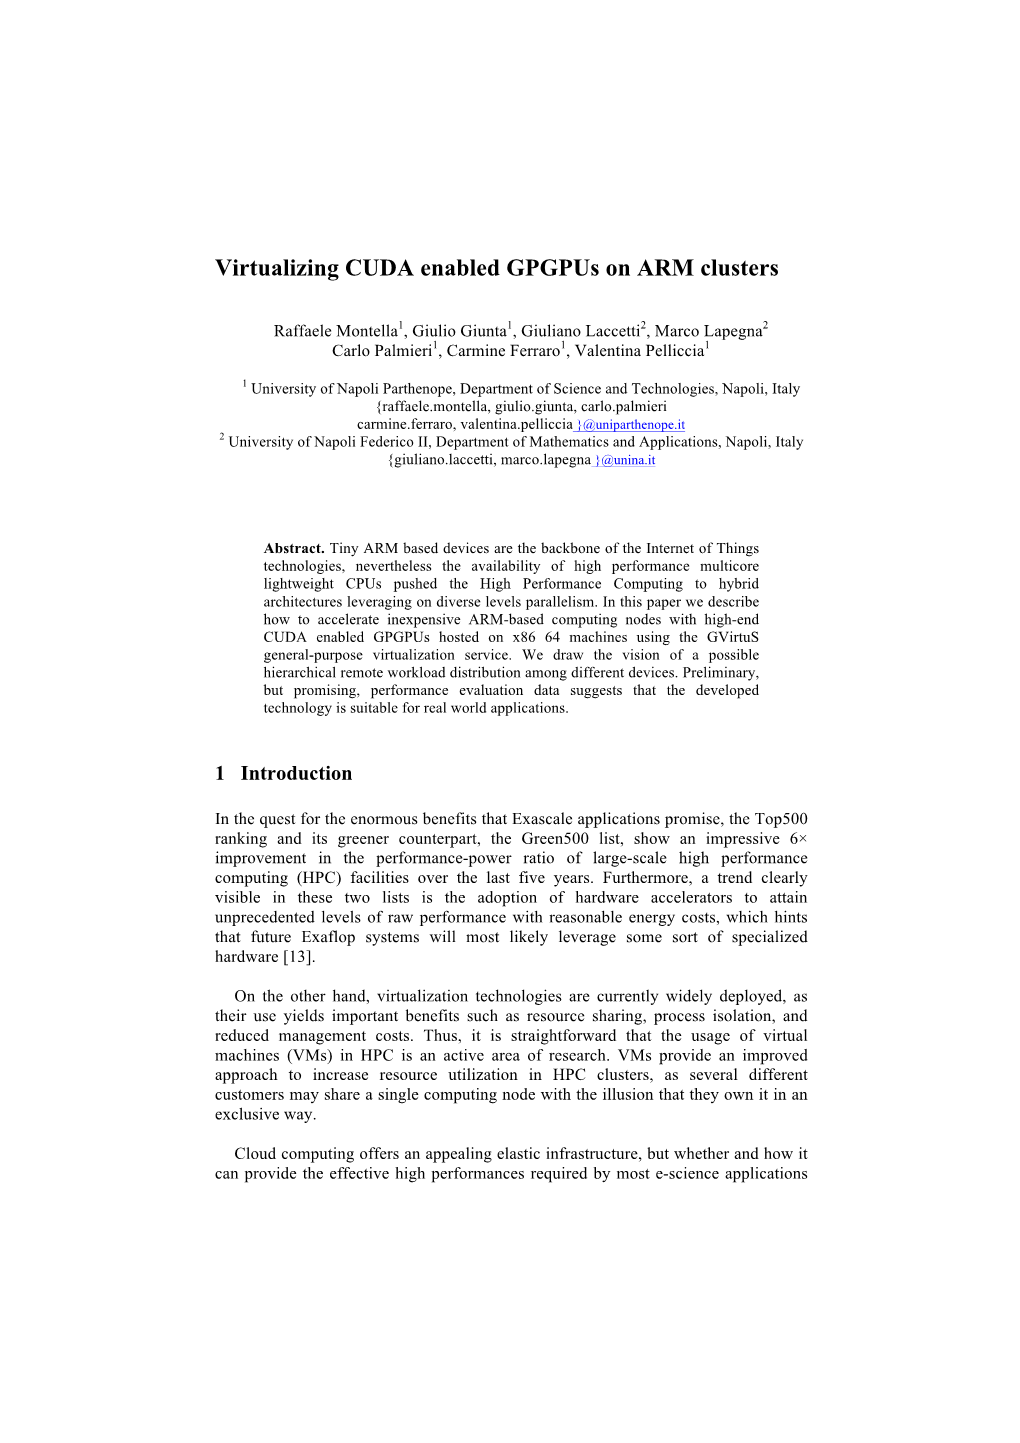 Virtualizing CUDA Enabled Gpgpus on ARM Clusters